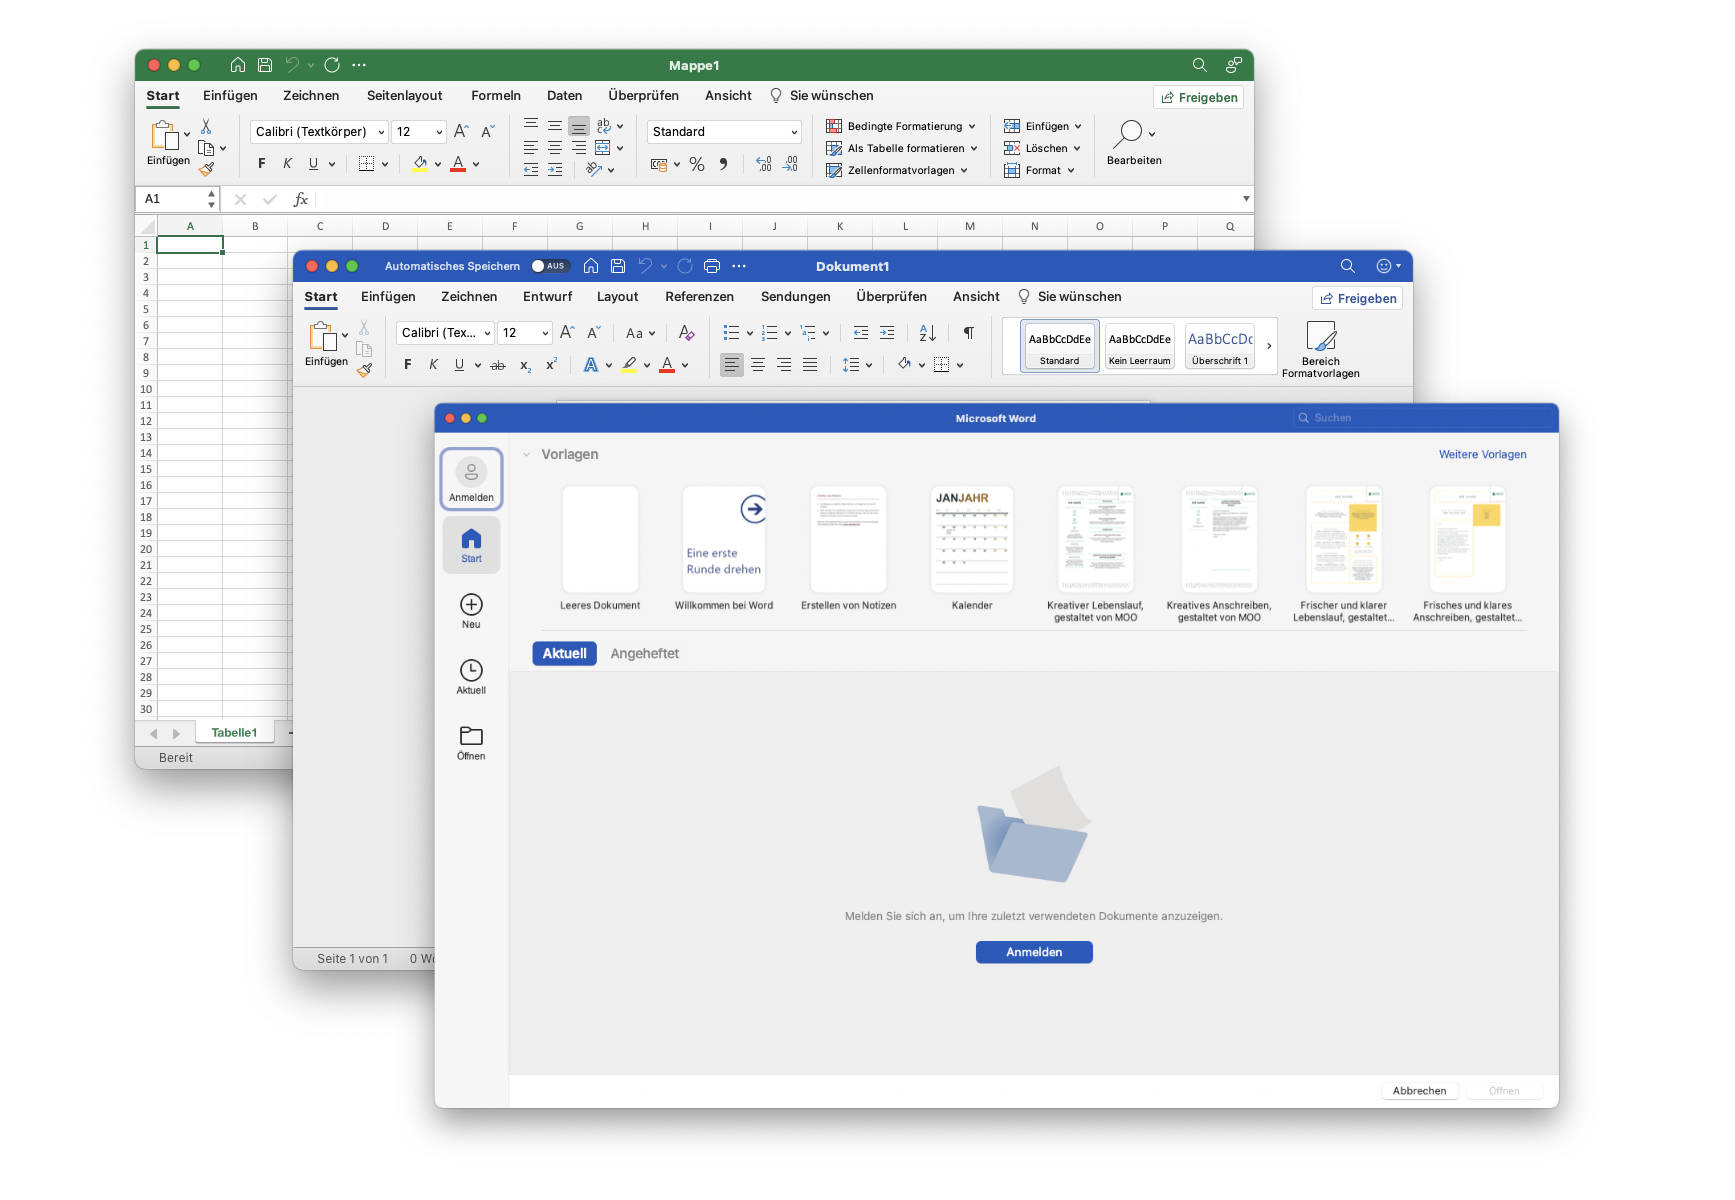 Microsoft Office 2021 for Mac LTSC v16.84 VL Multilingual